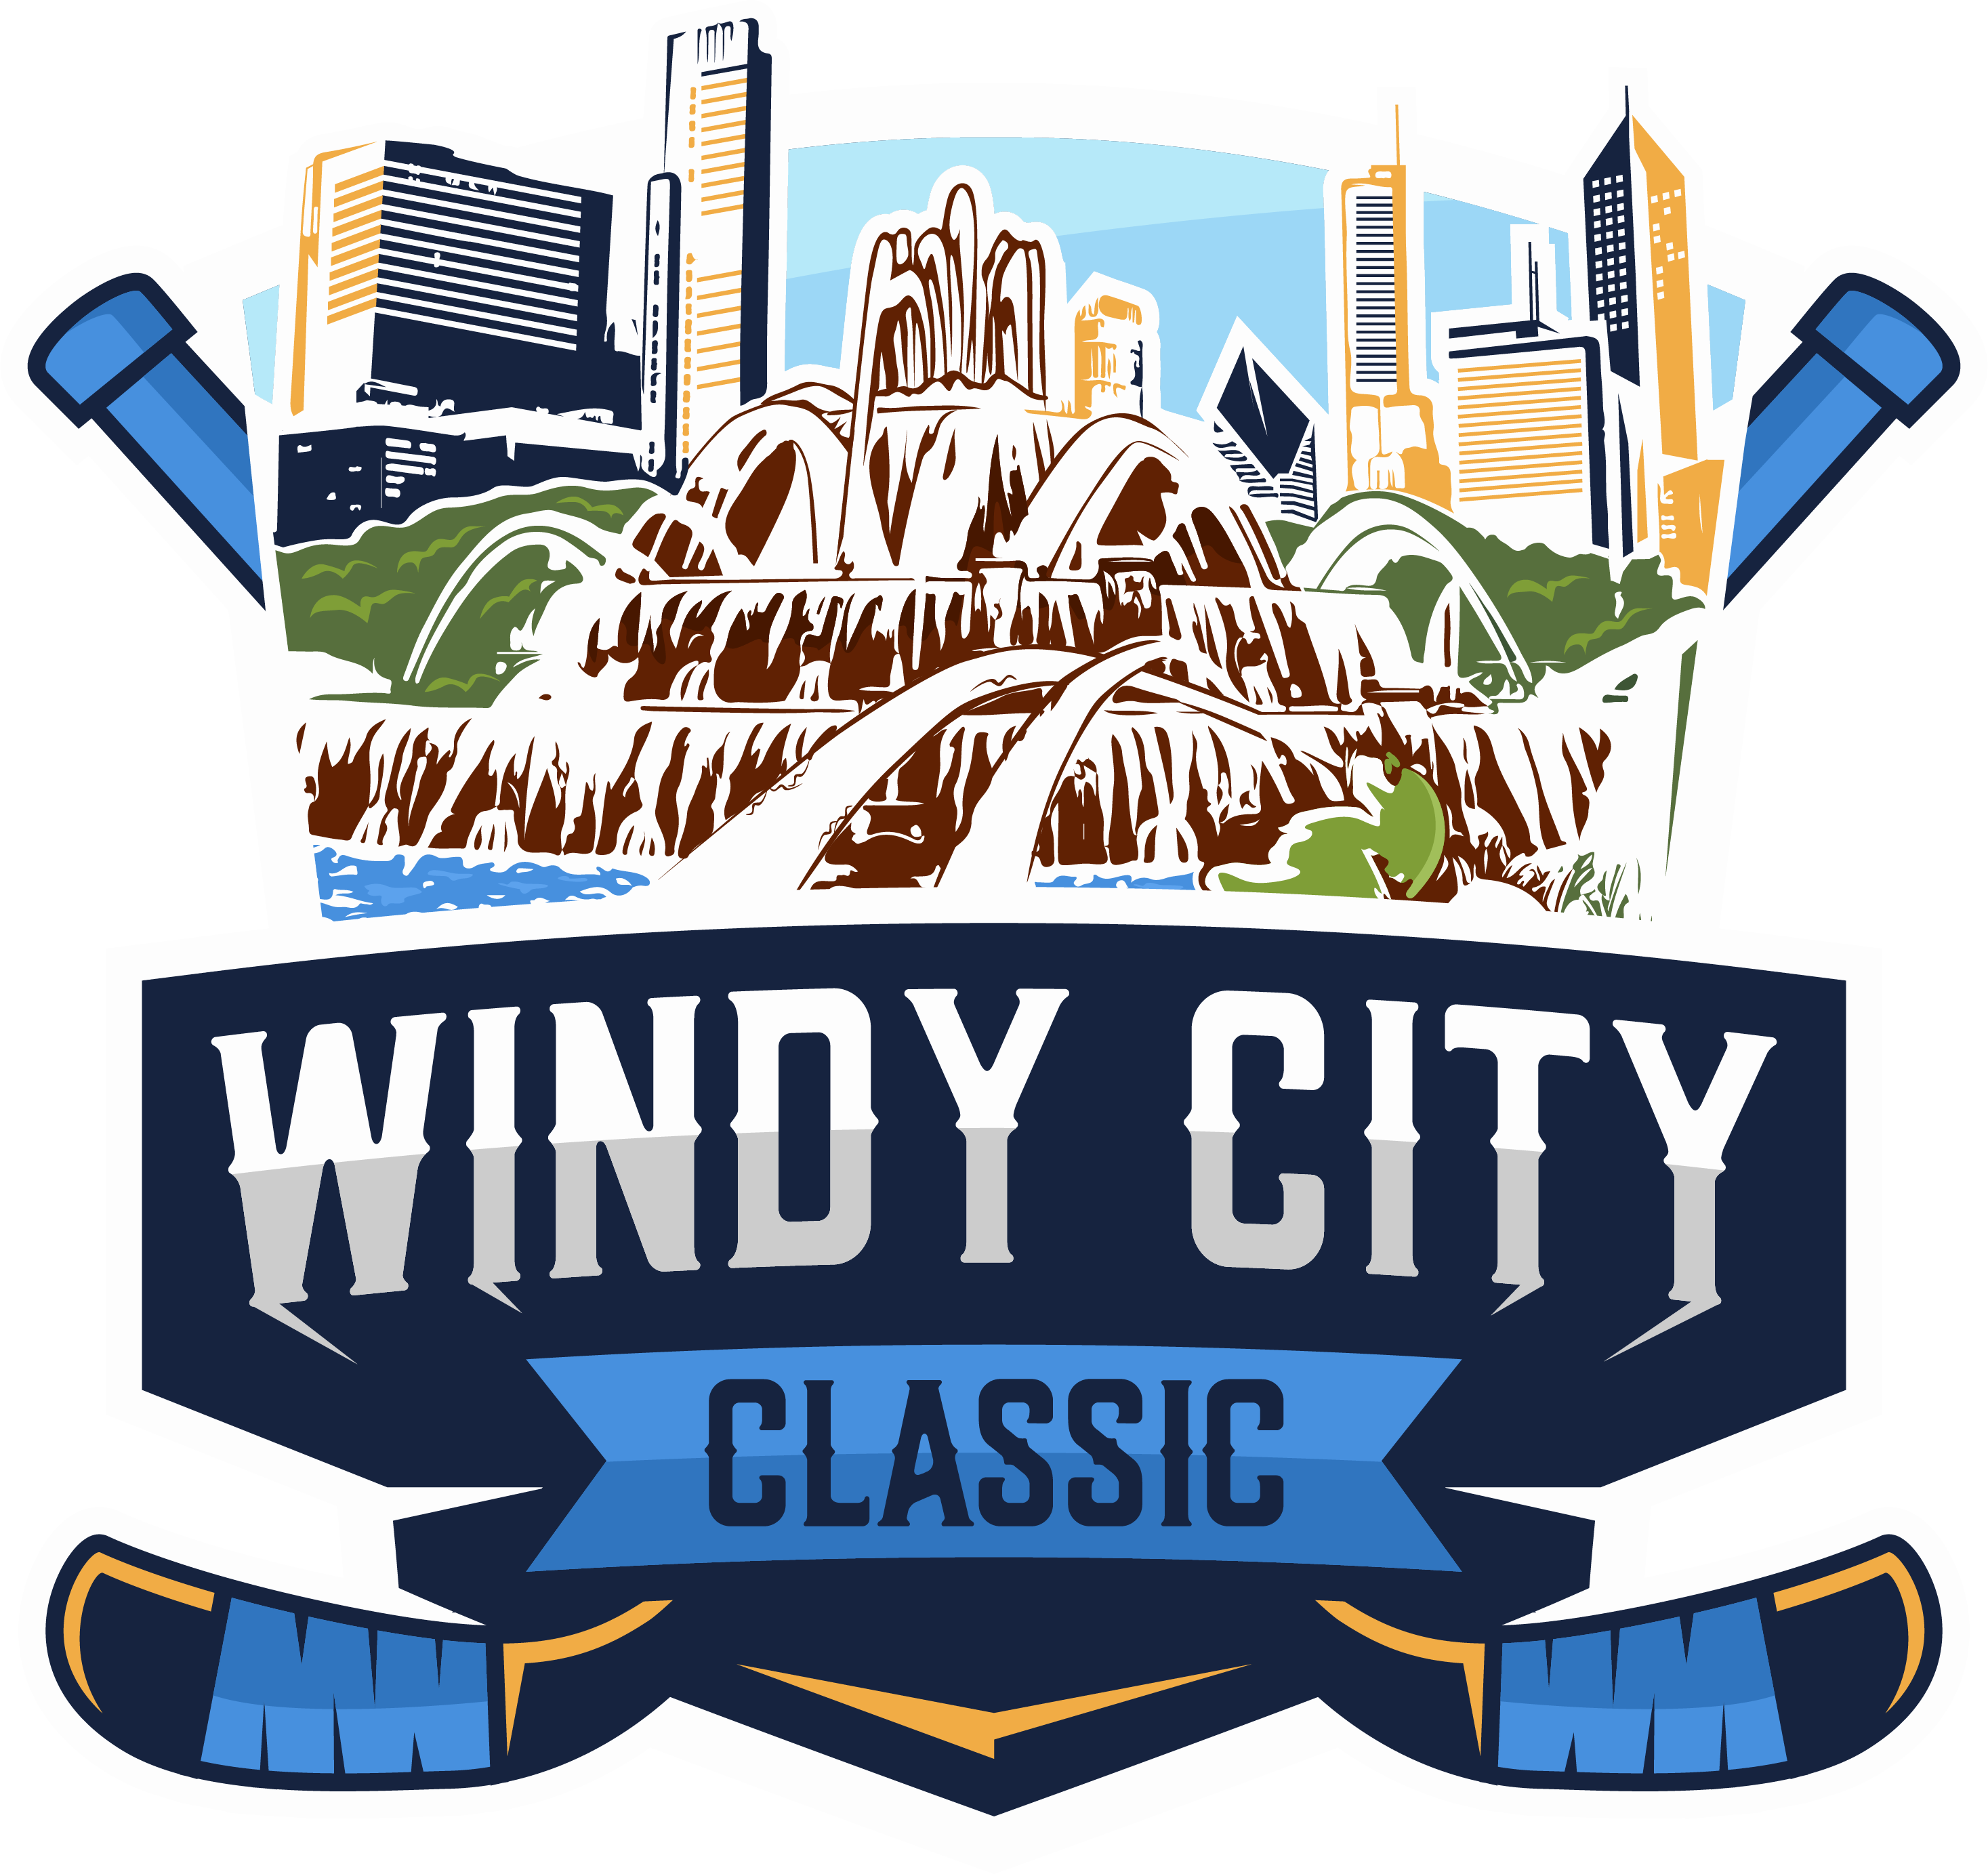 Chicago - Windy City Classic 23 (hybrid)